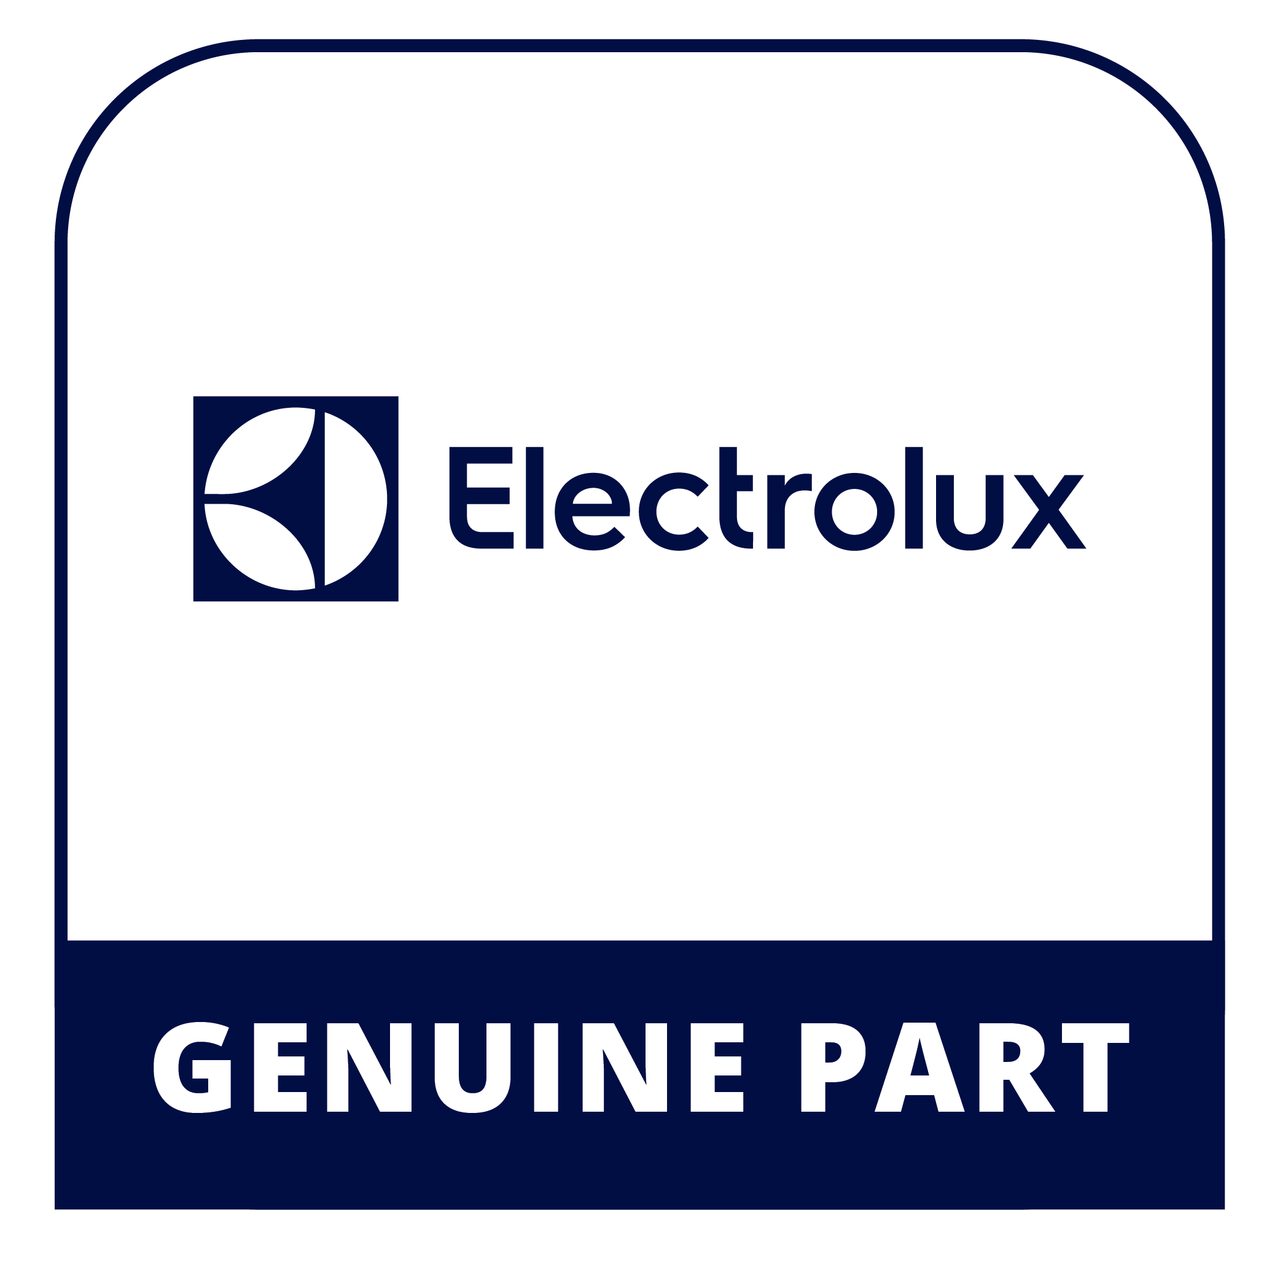 Frigidaire - Electrolux 318242221 - Knob - Genuine Electrolux Part